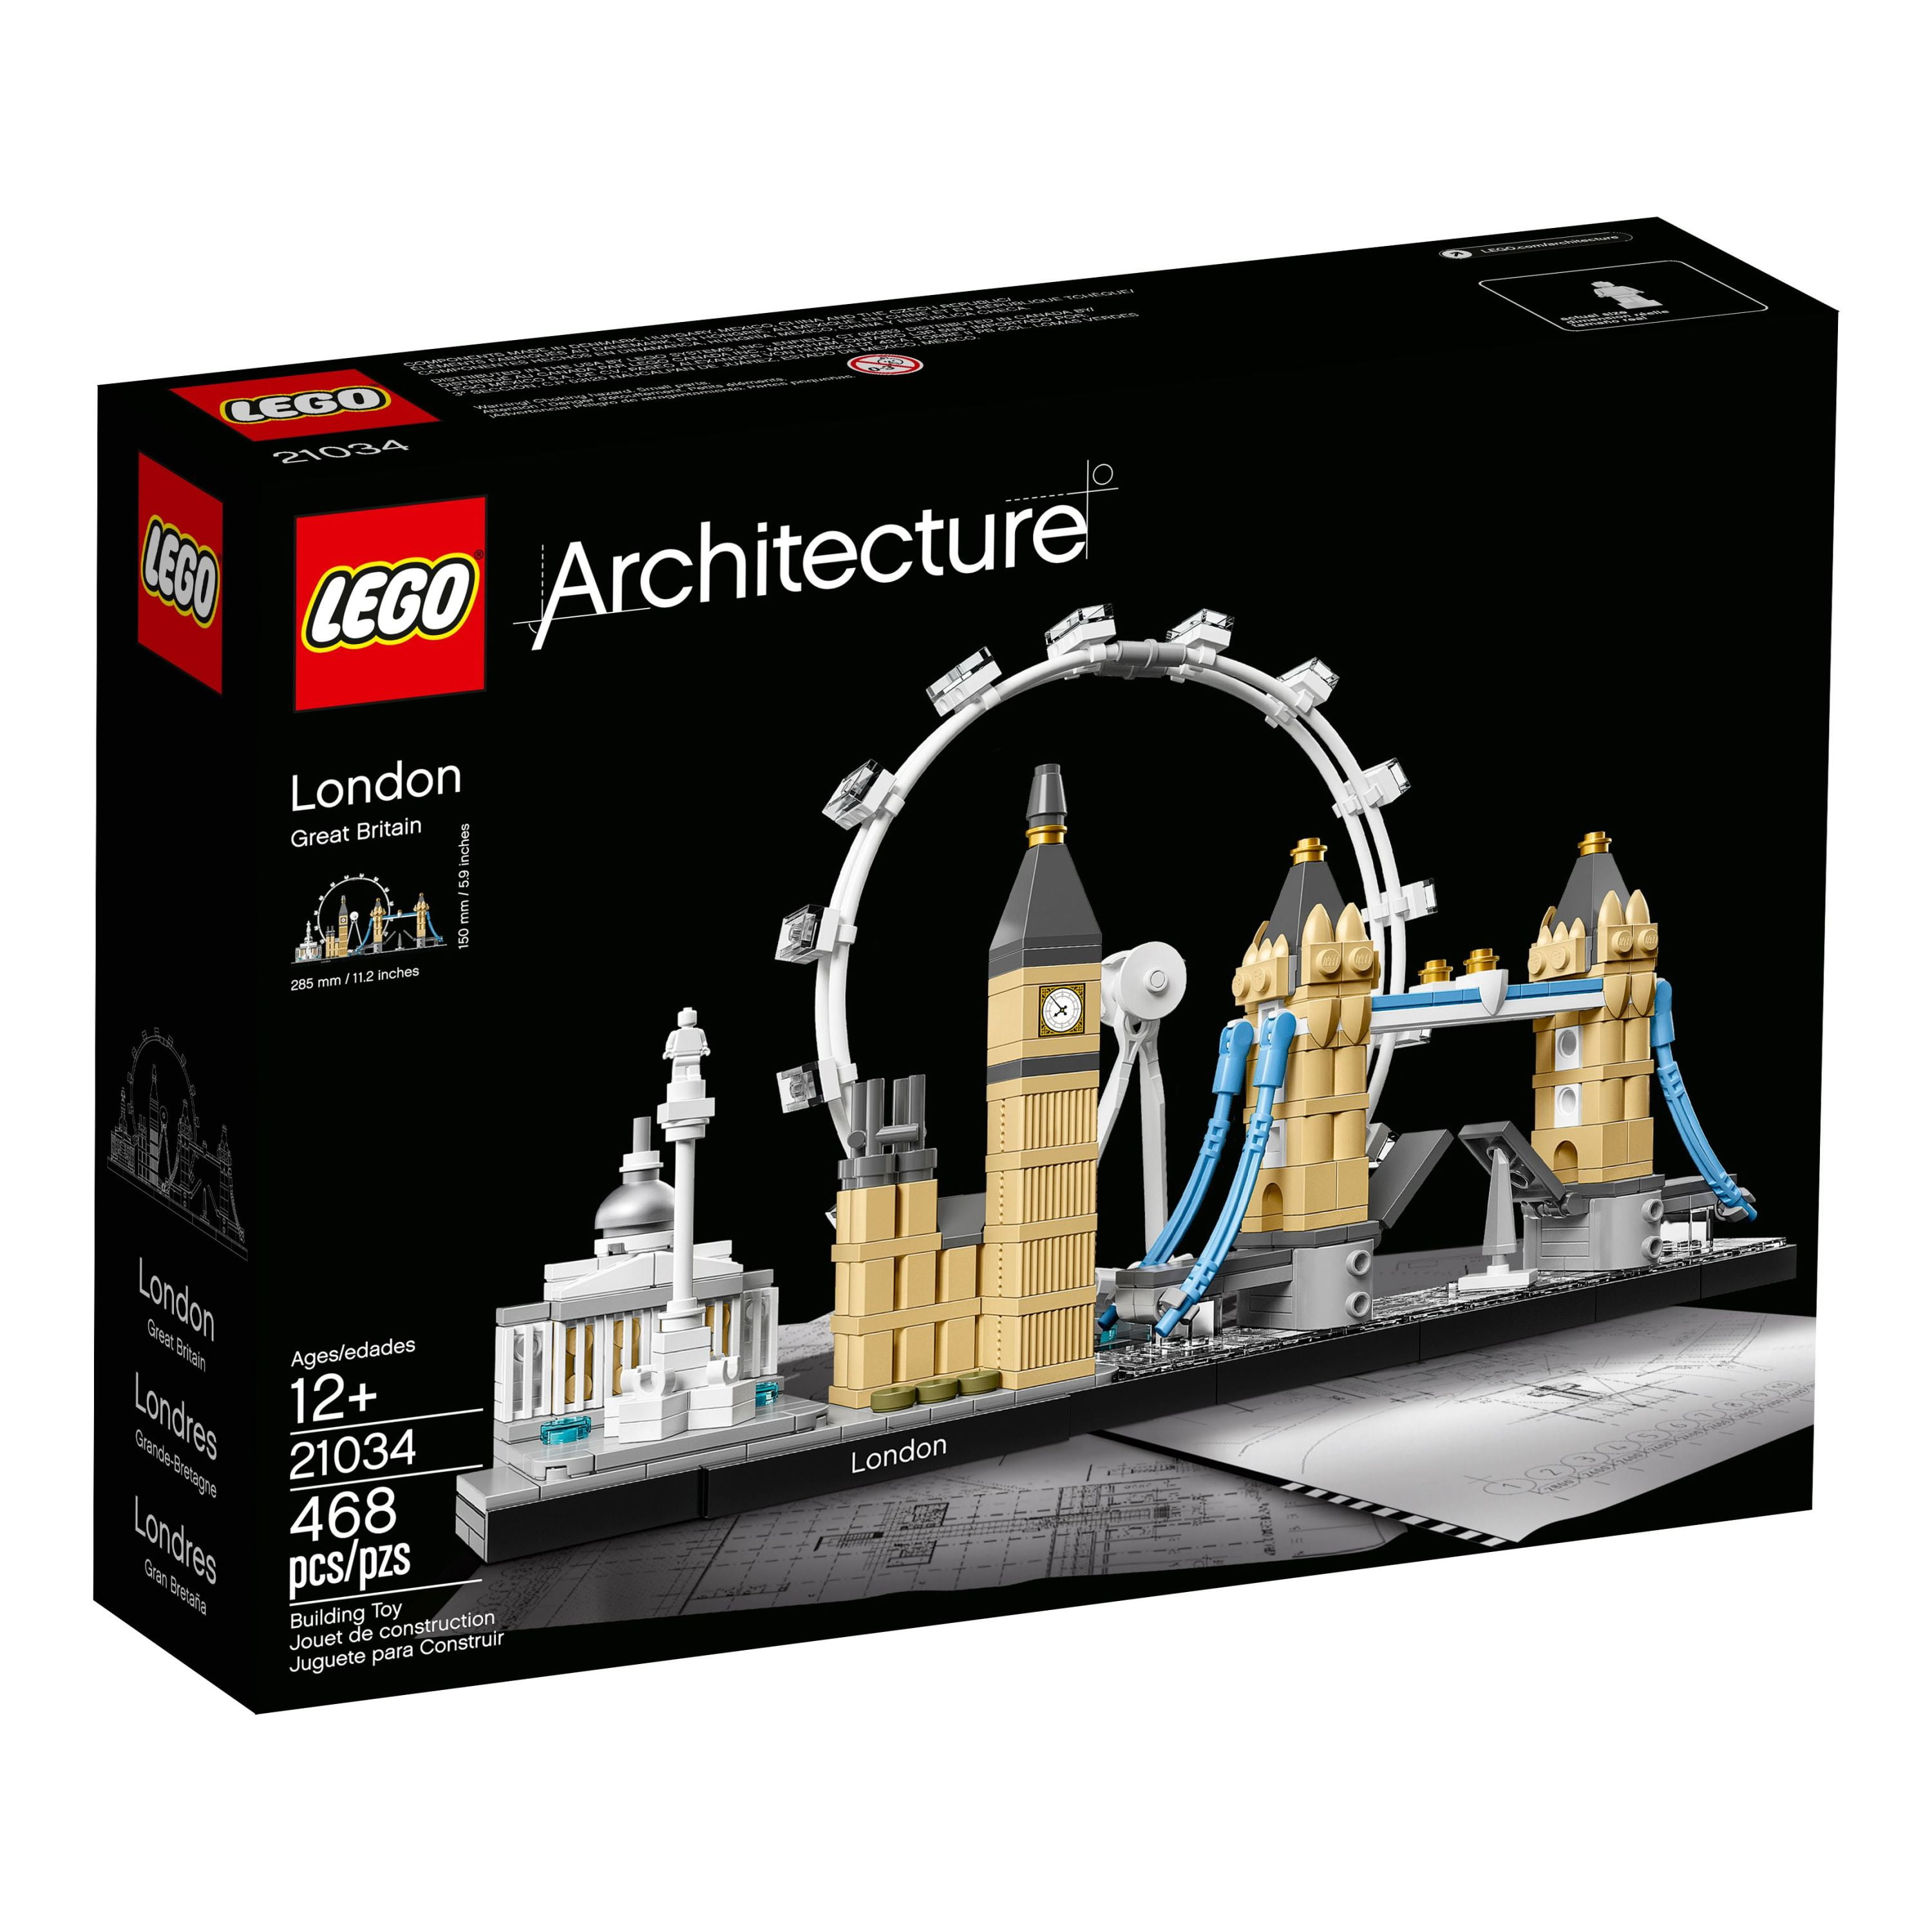 LEGO Architecture London 21034 Collectible Model Building Kit London Eye, Big Ben, and Tower Bridge, Office Décor, Skyline Collection - Walmart.com